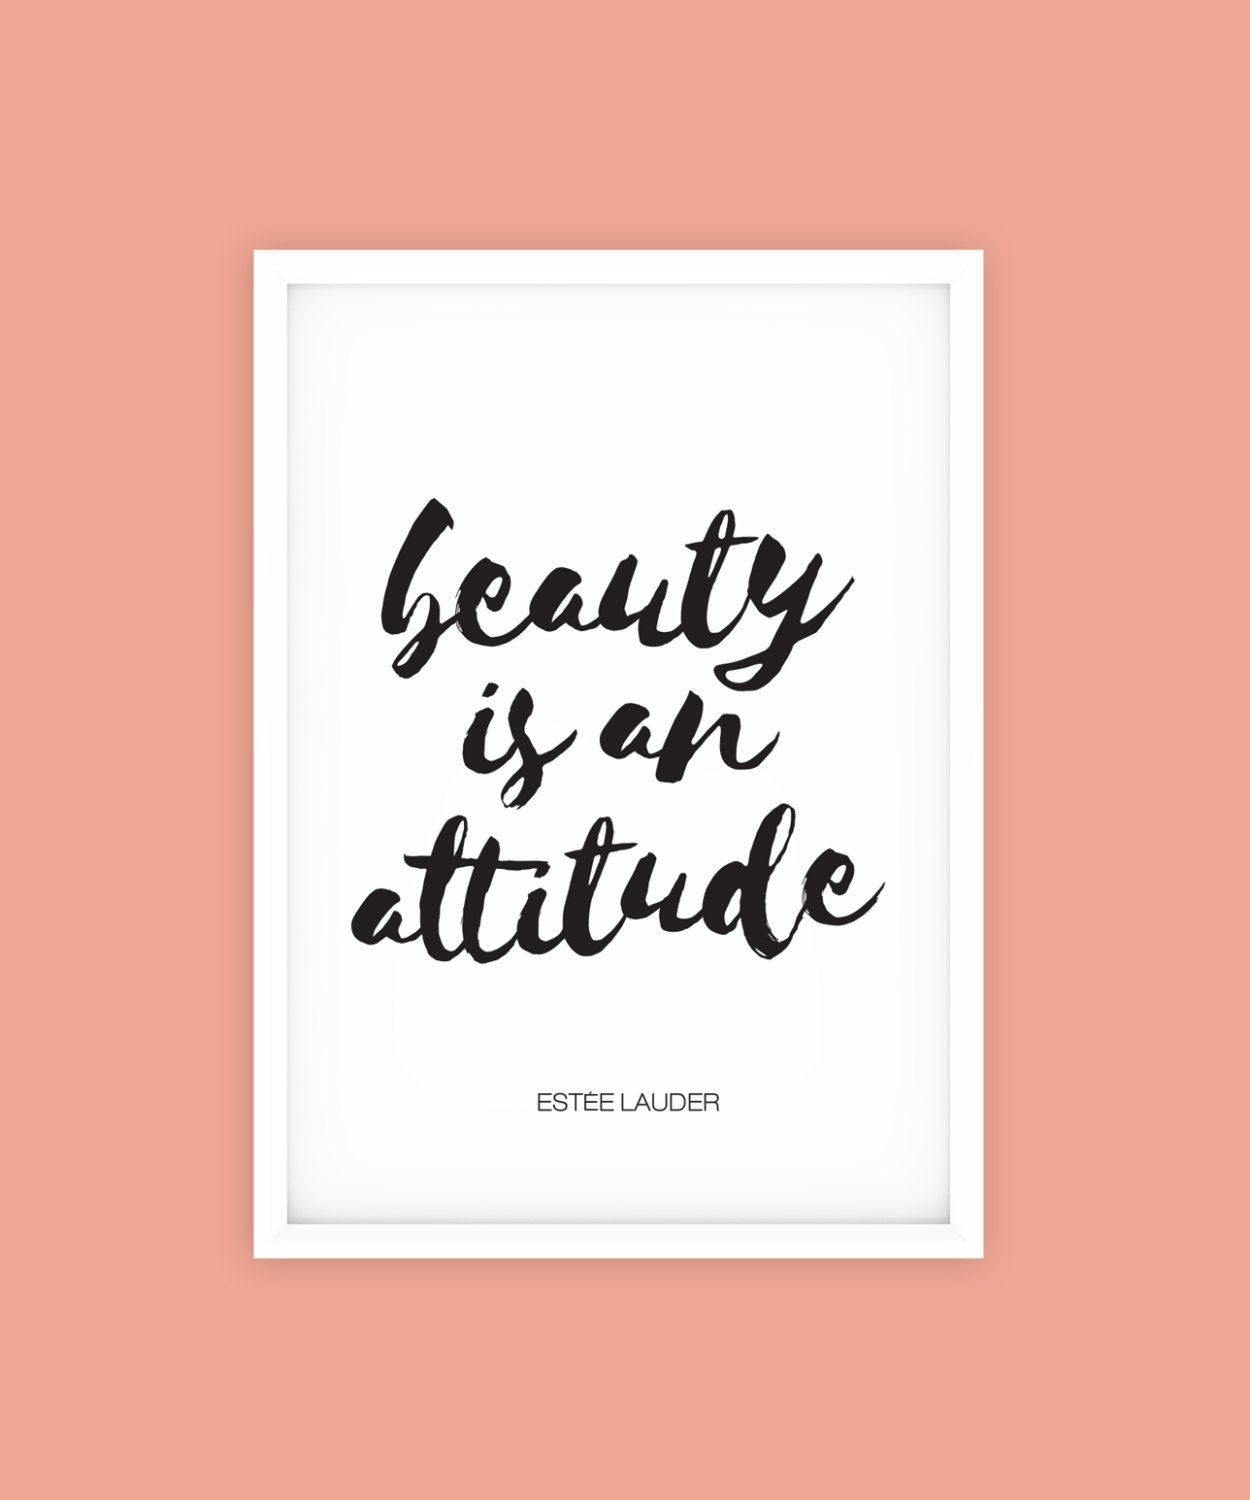 Life is an attitude